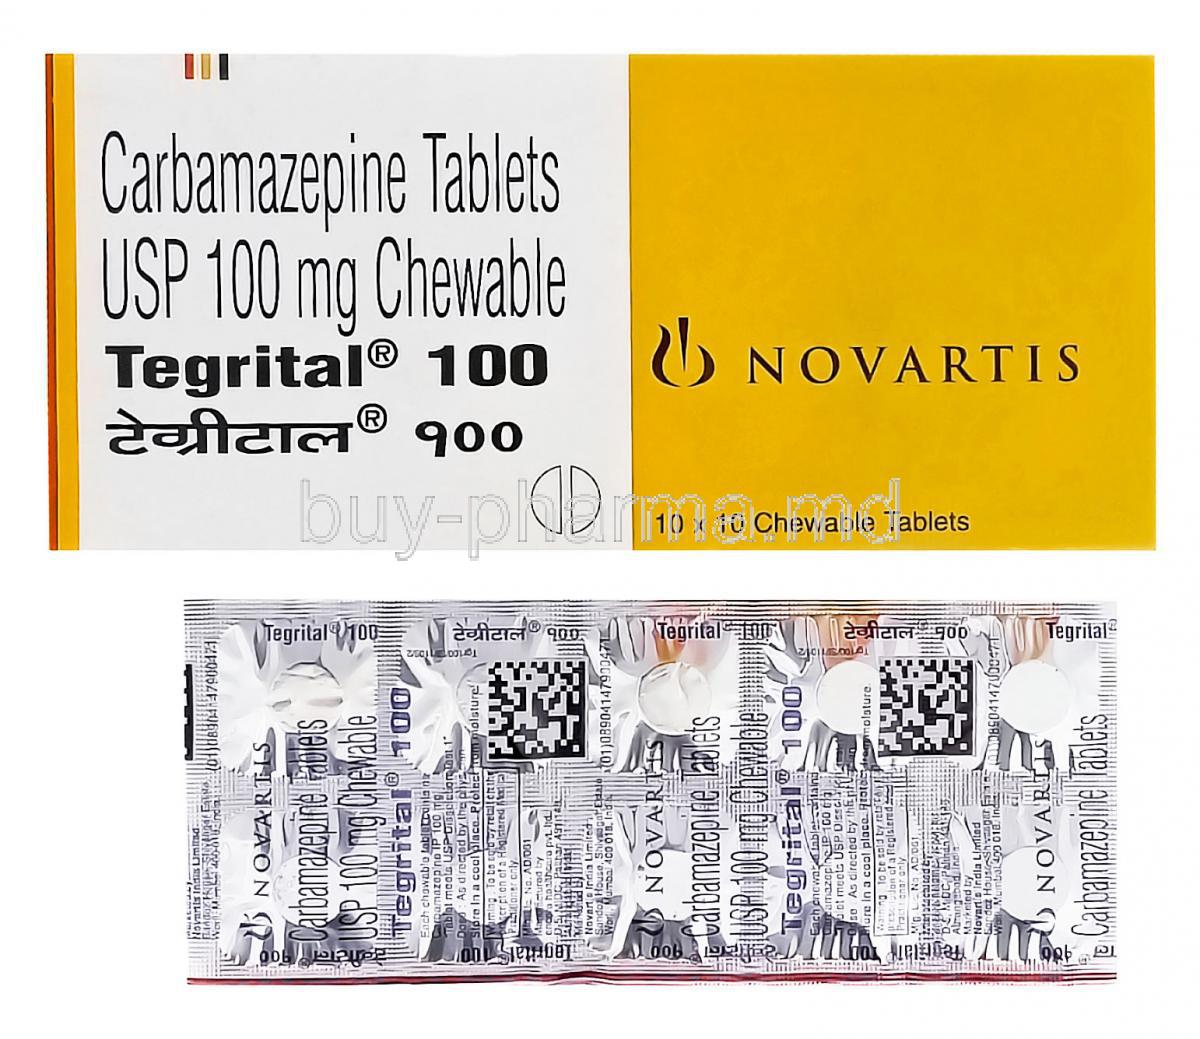 Tegrital, Generic Tegretol, Carbamazepine 100mg Chewable Tablet